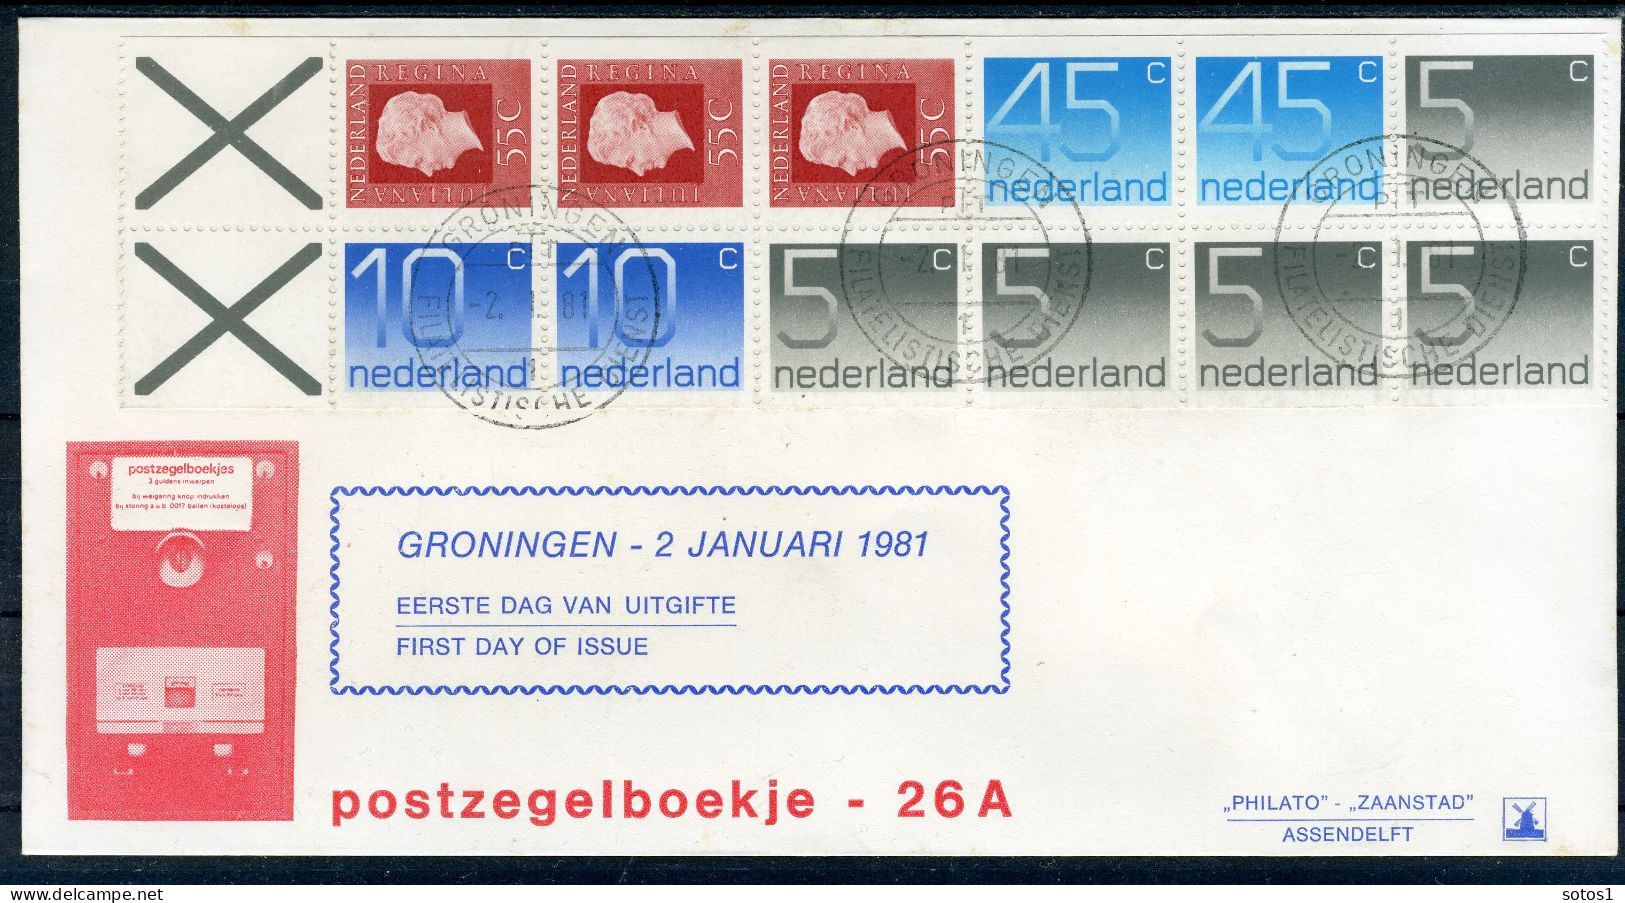 NEDERLAND PB26a FDC 1981 - Postzegelboekje - Carnets Et Roulettes